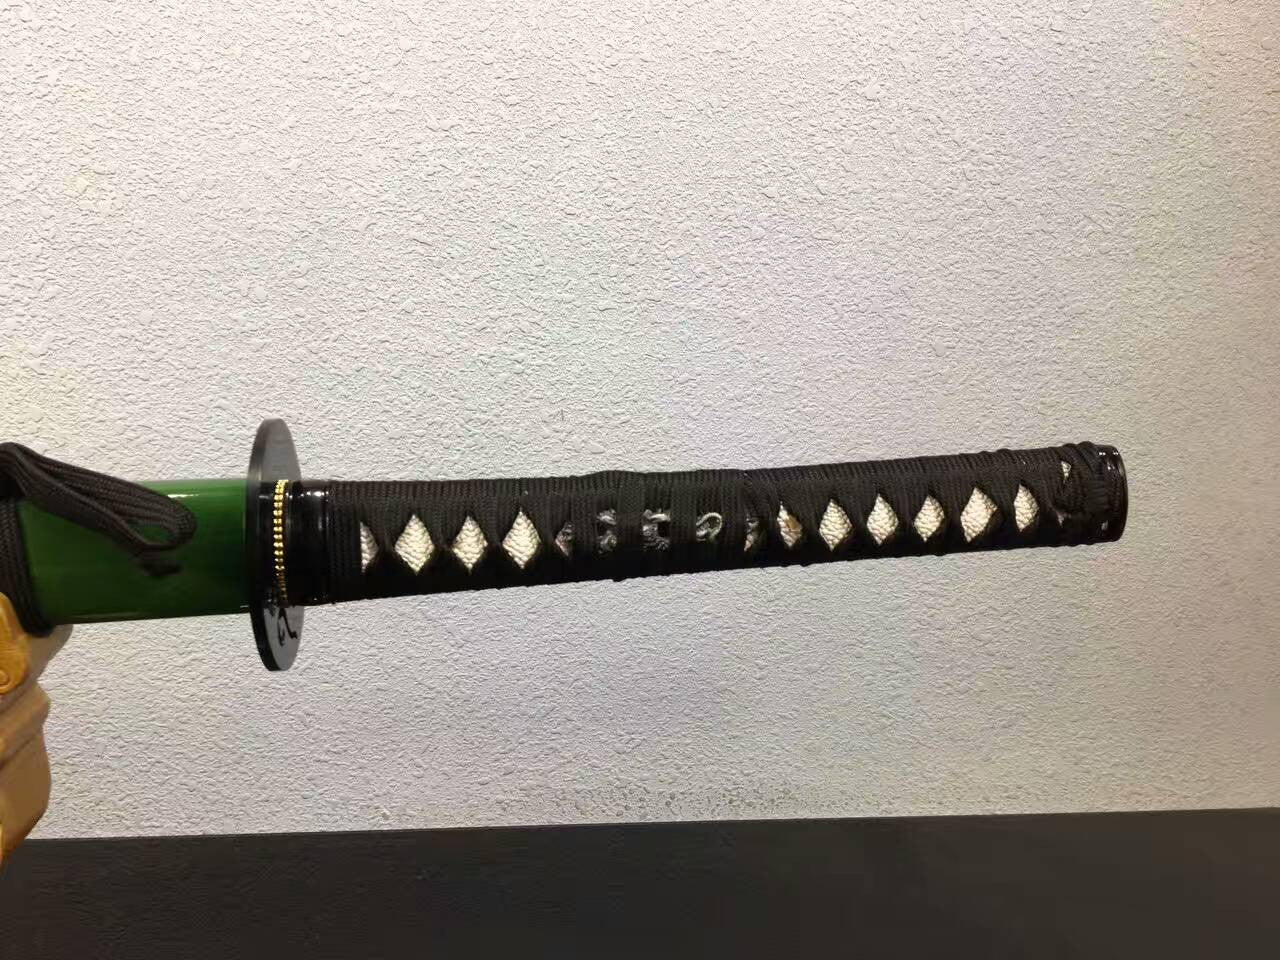 Samurai sword,katana(High manganese steel,Green scabbard,Alloy fitted)Full tang,Length 39" - Chinese sword shop